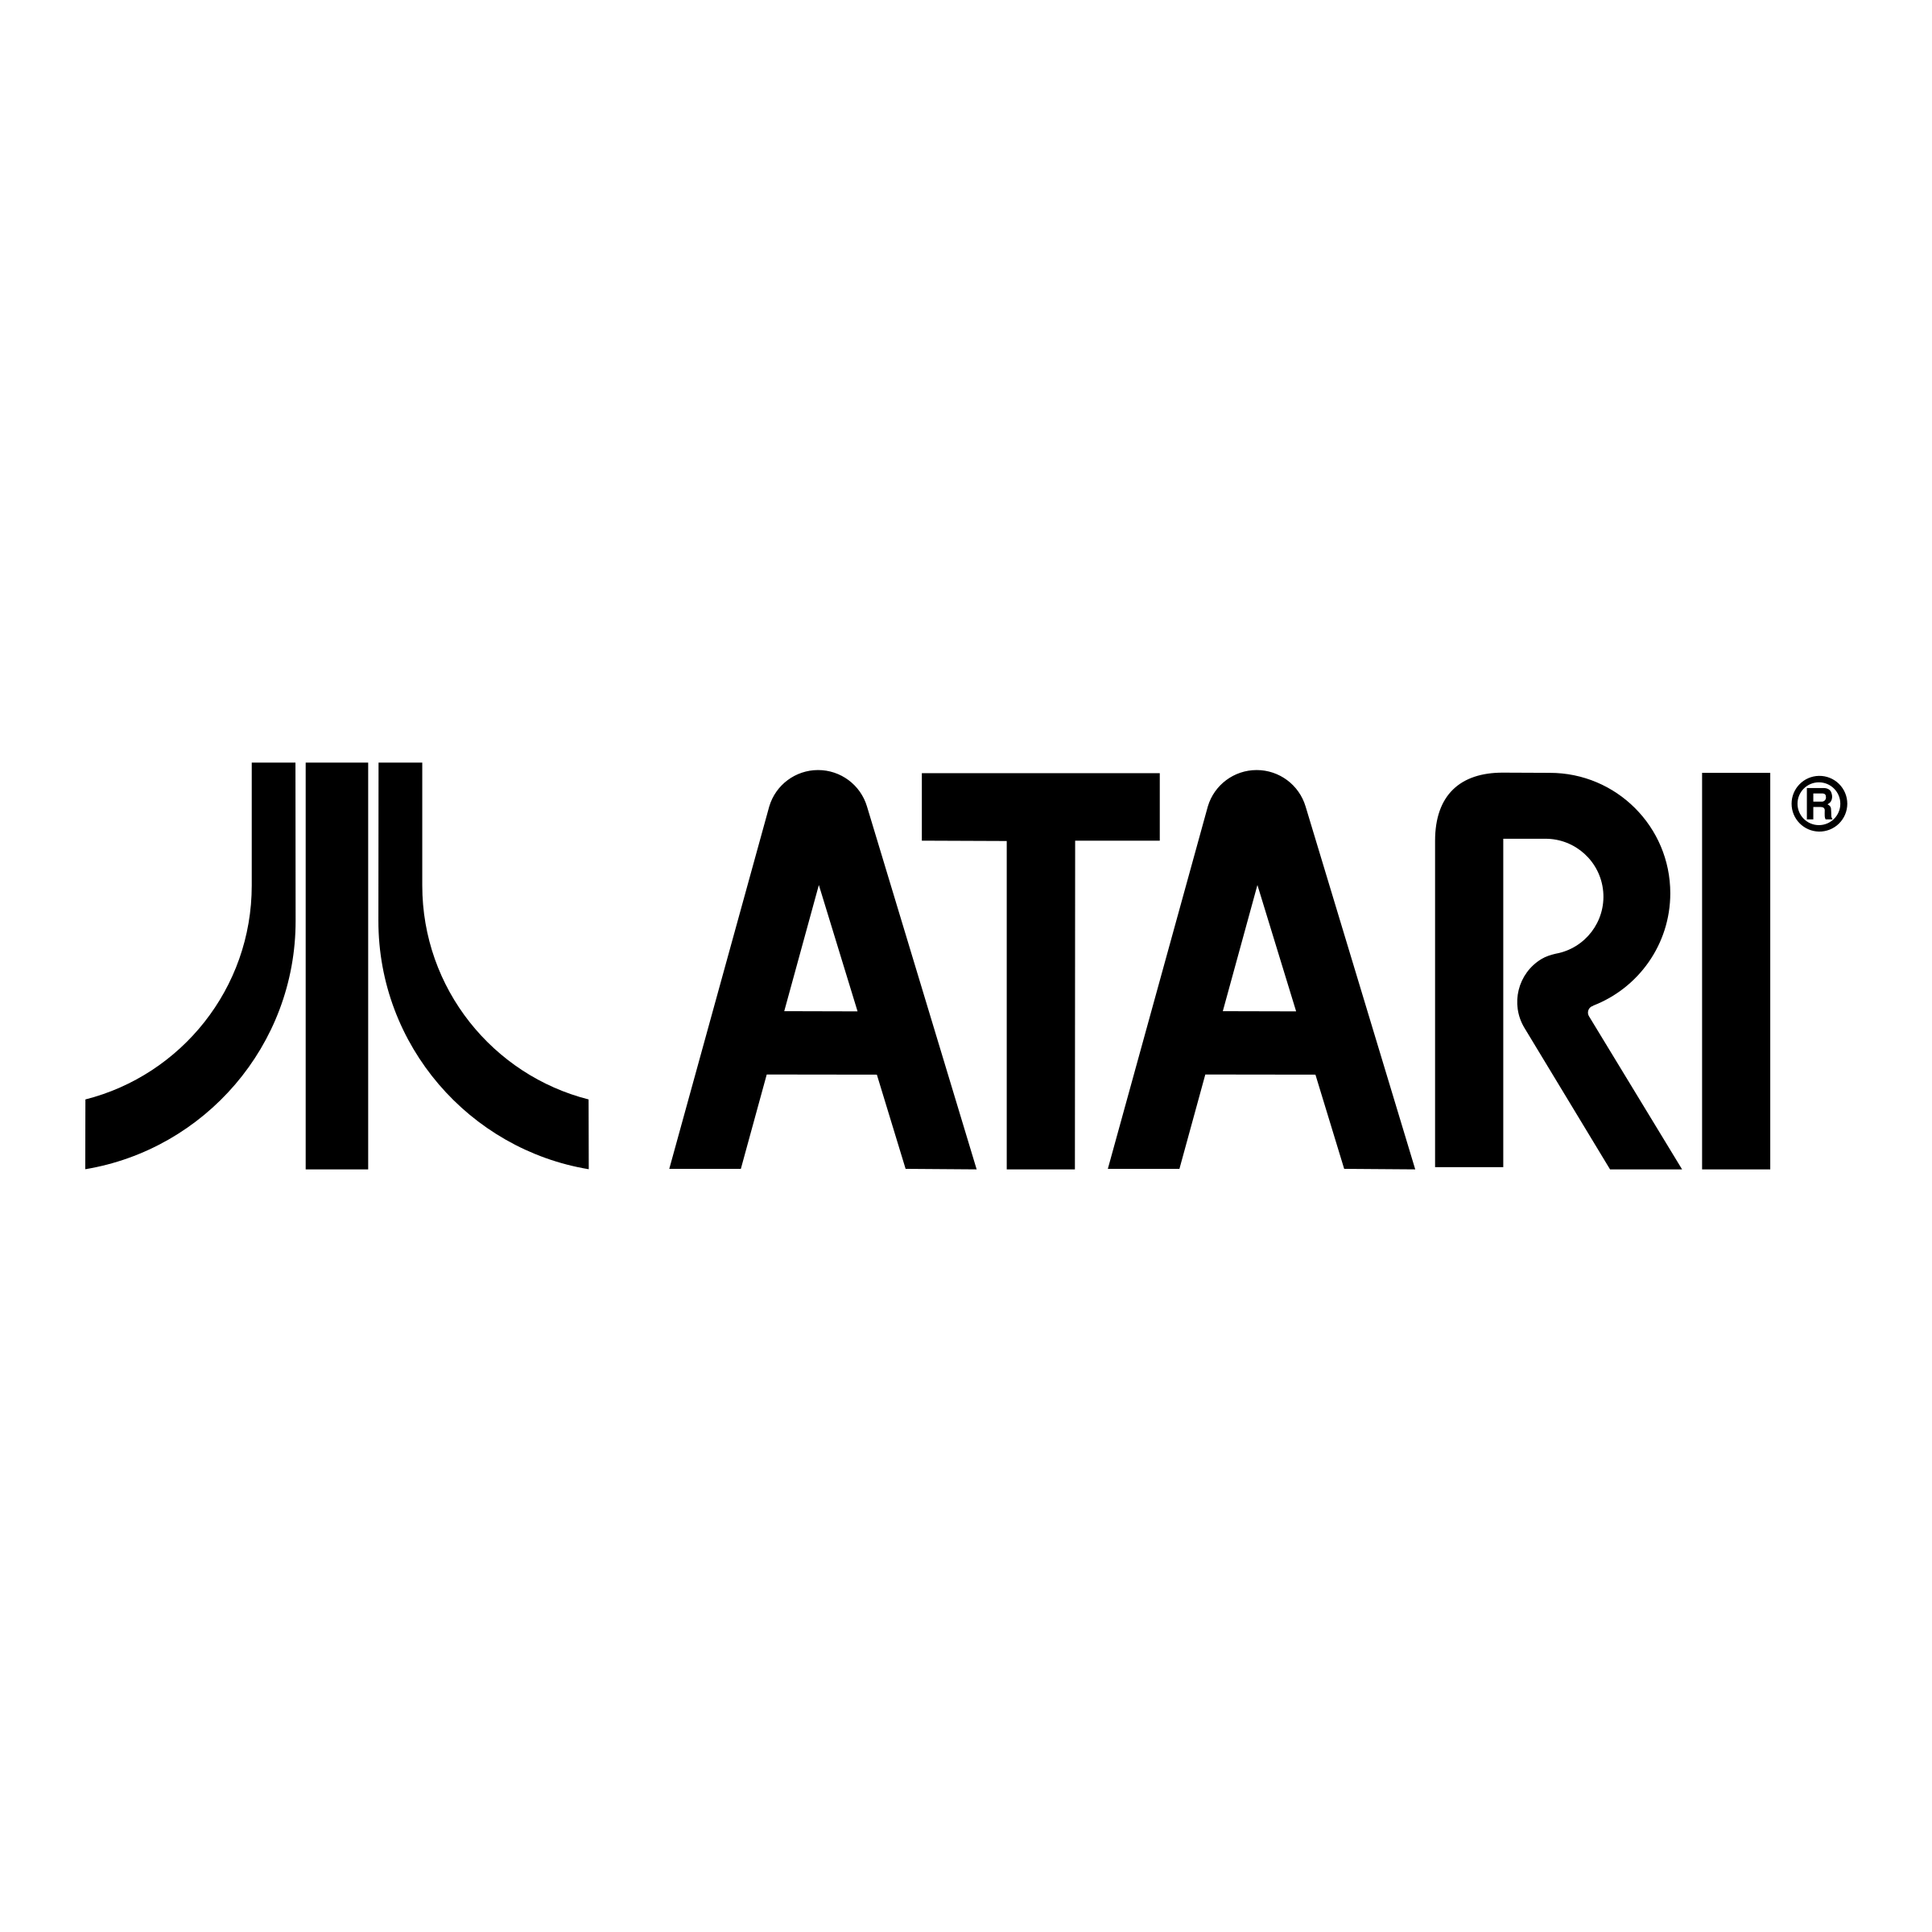 Atari Logo - Atari Logo PNG Transparent & SVG Vector - Freebie Supply